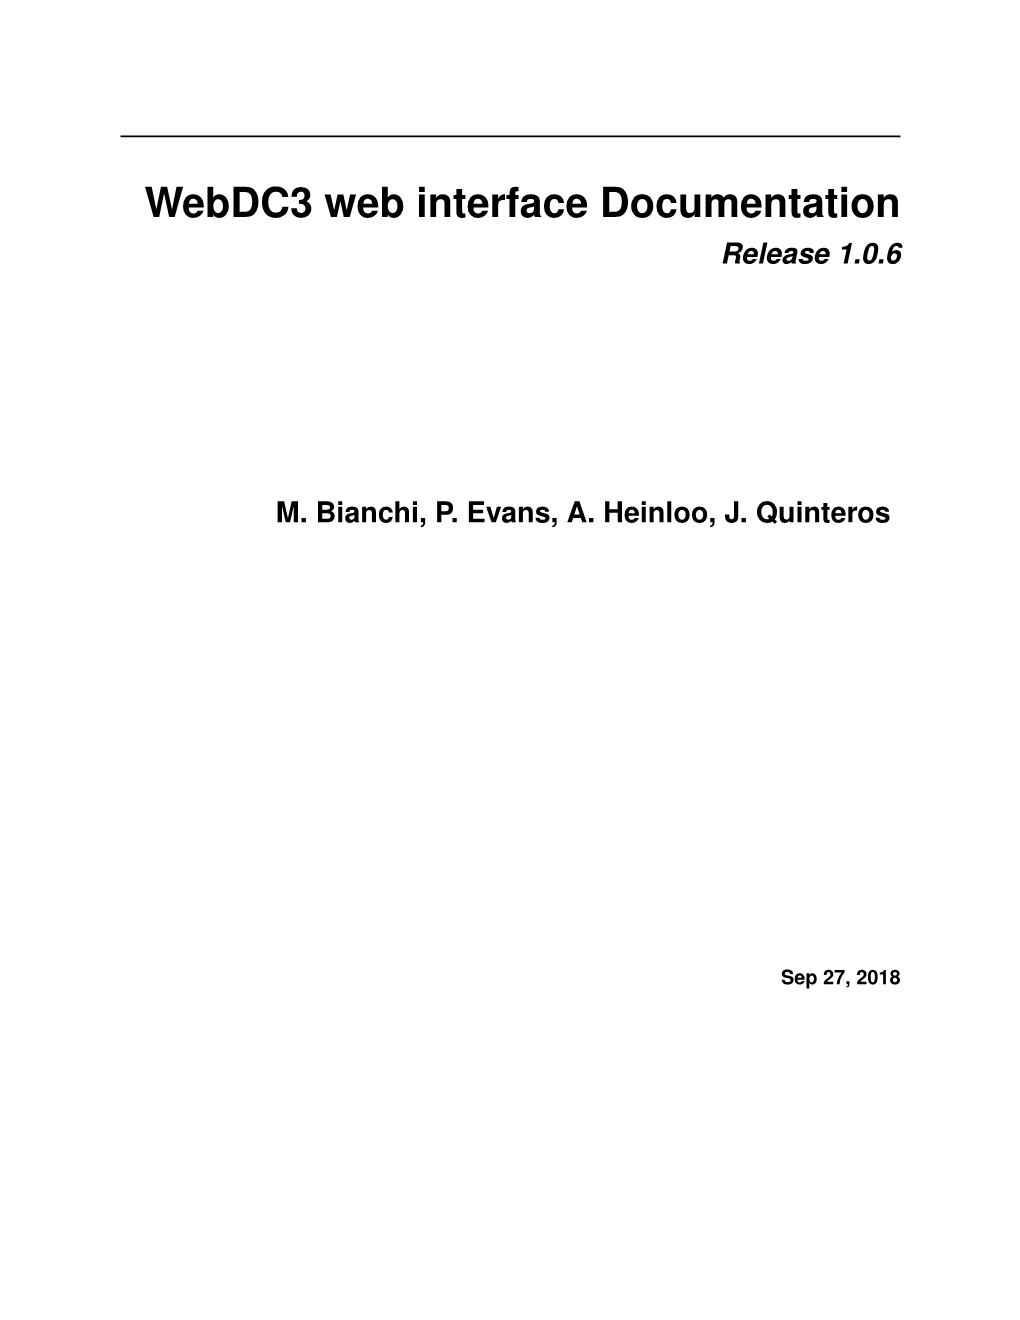 Webdc3 Web Interface Documentation Release 1.0.6